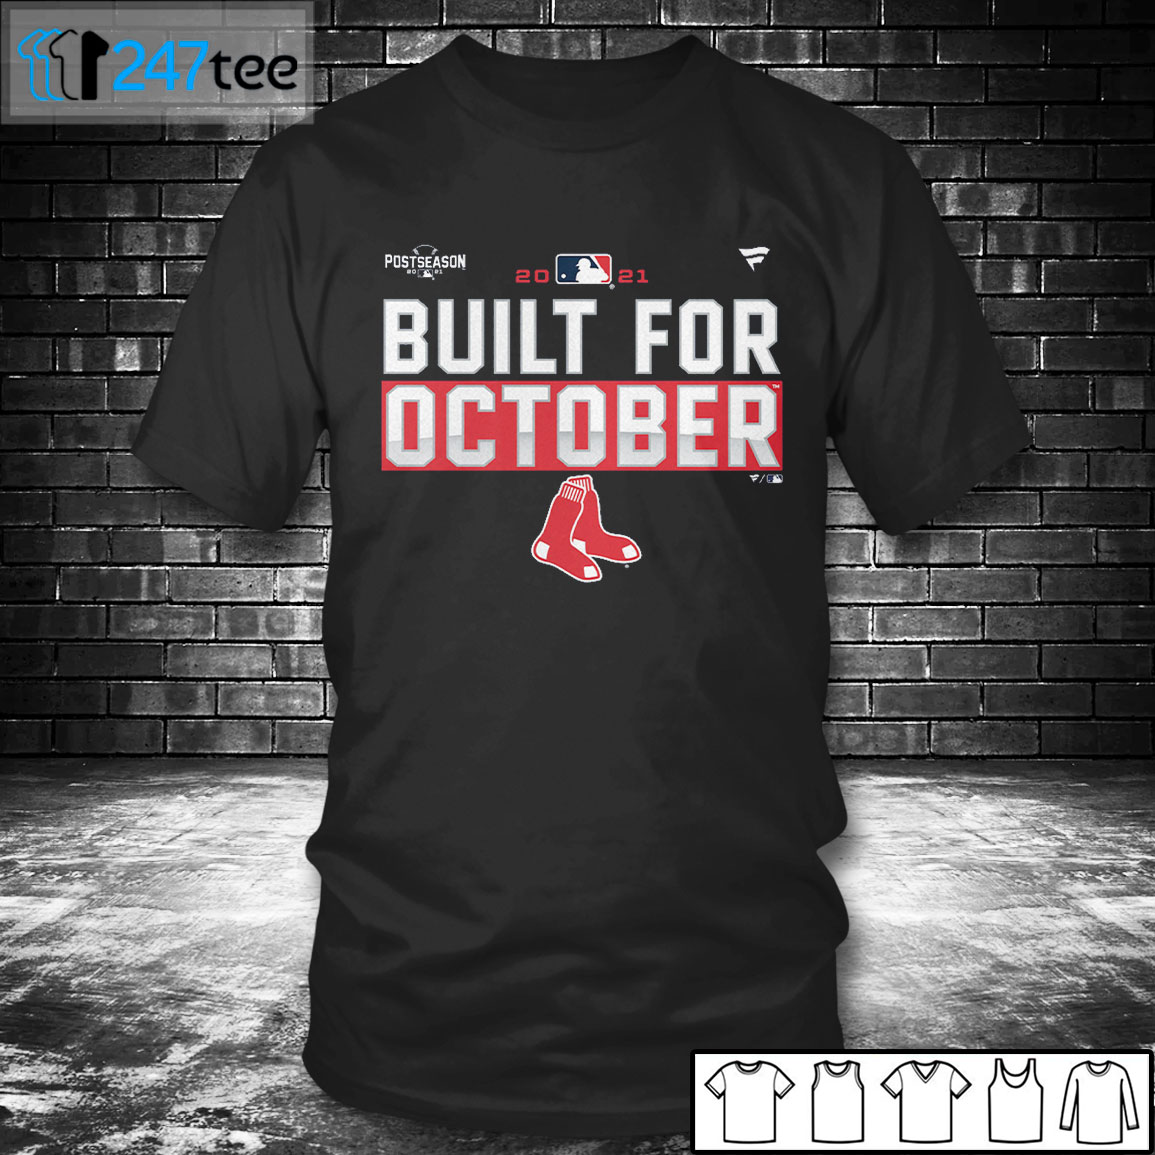 Boston Red Sox 2021 Postseason Built for October Shirt, Hoodie - Q ...